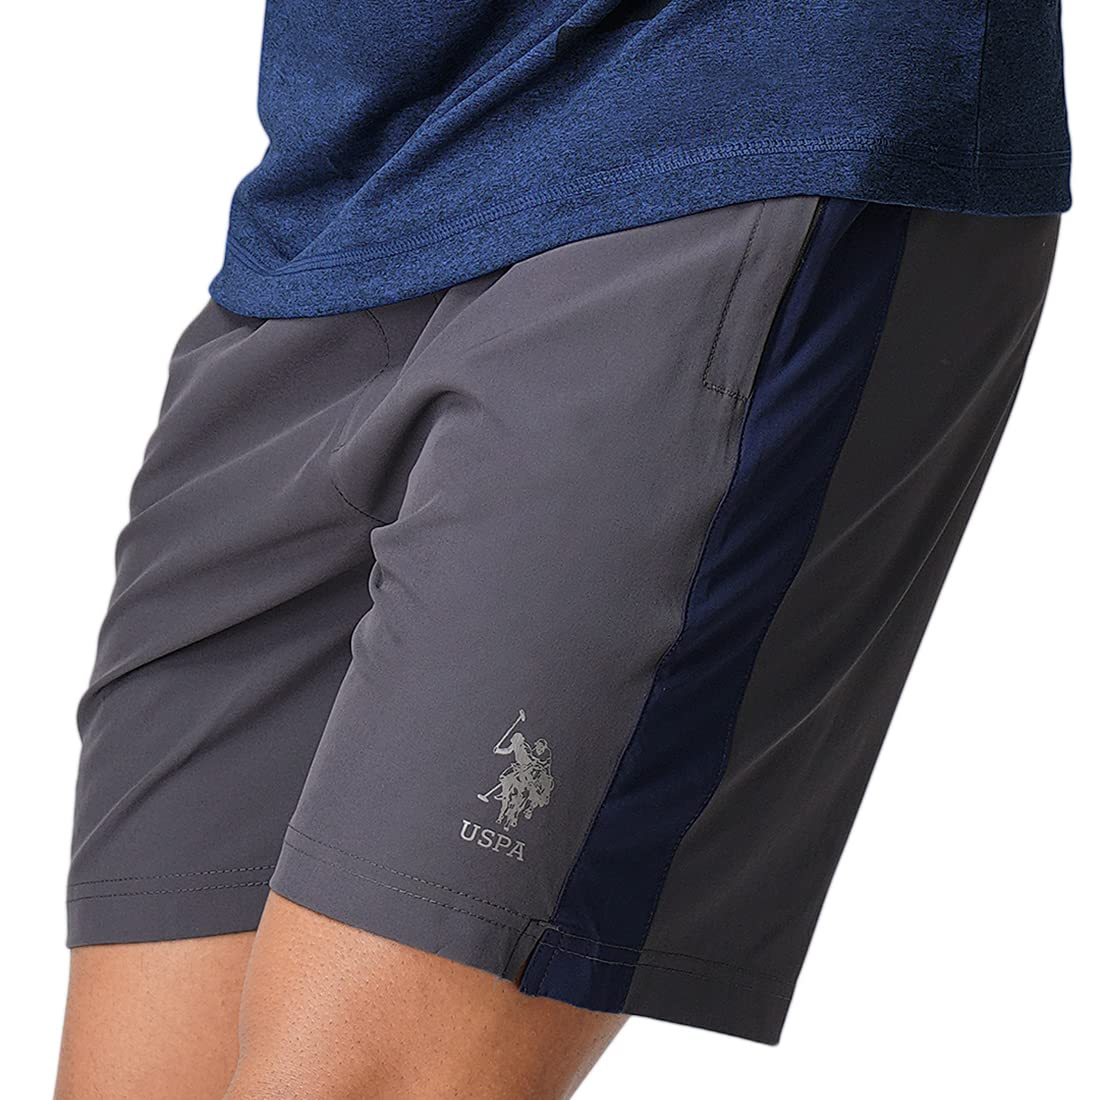 U.S. POLO ASSN. Men Mid Rise Elasticized Waist I716 Shorts - Pack of 1 (GREY M)